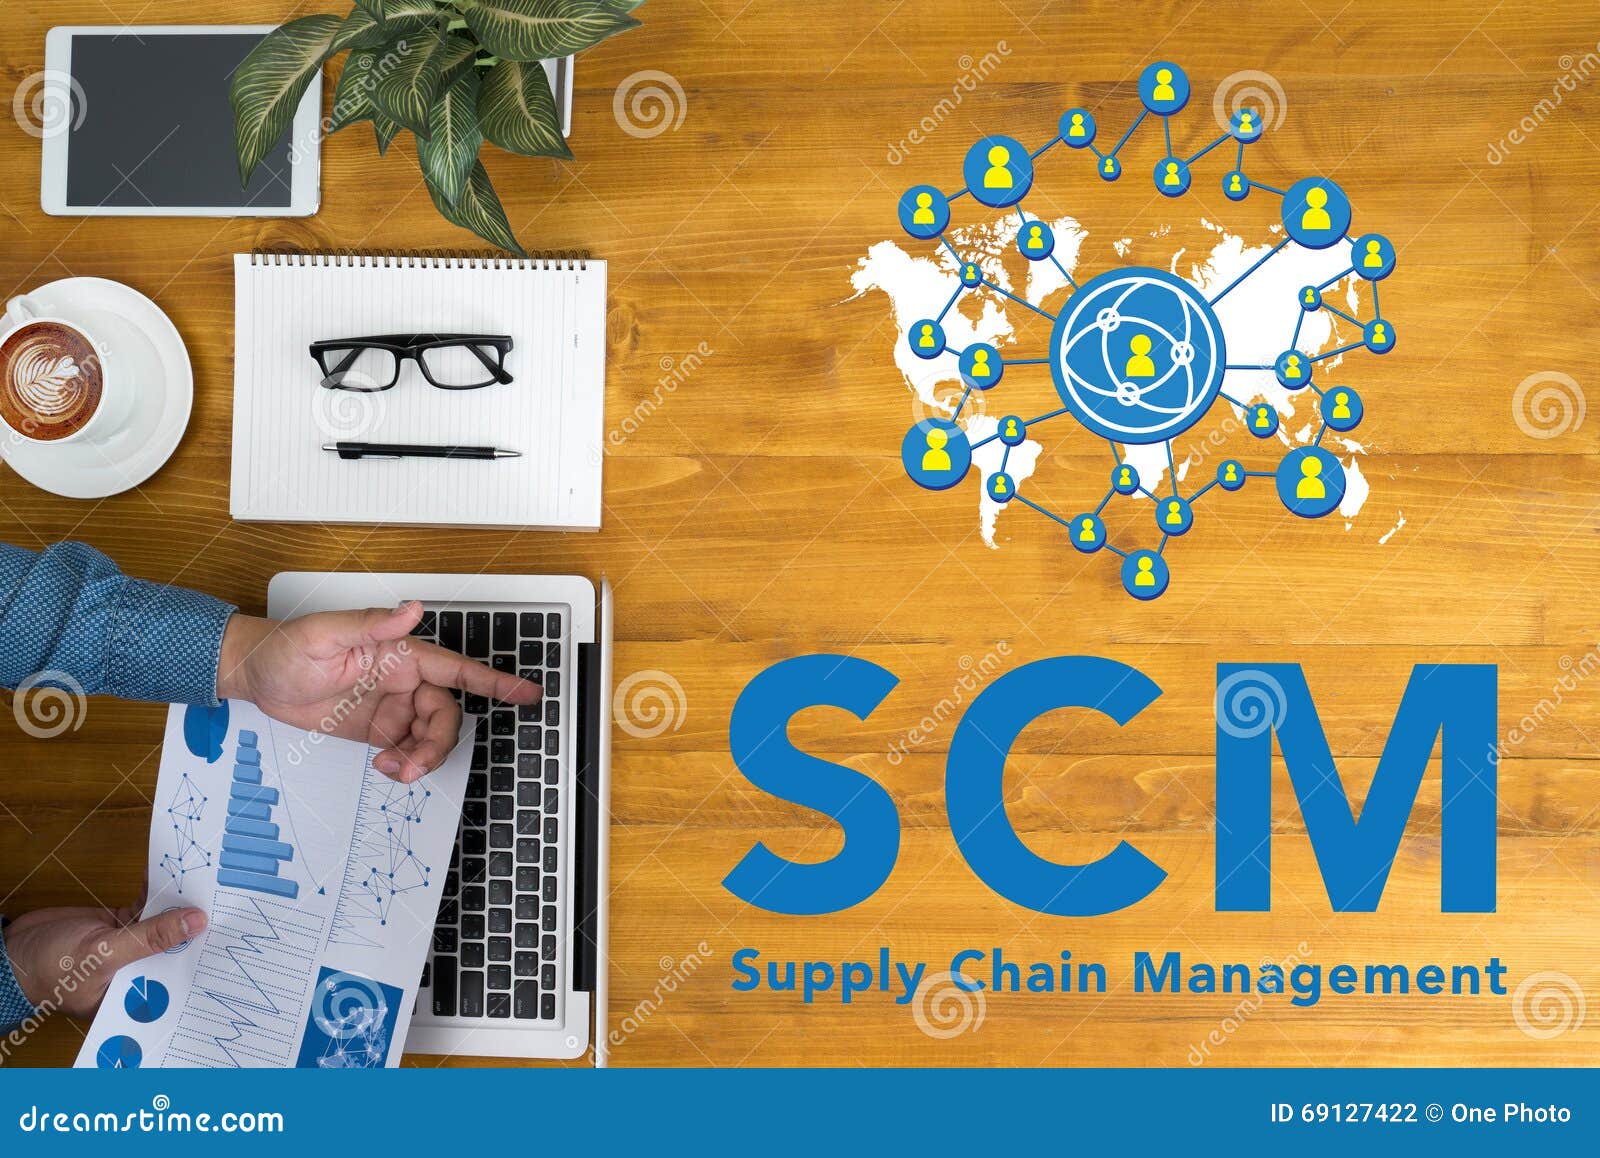 scm supply chain management concept